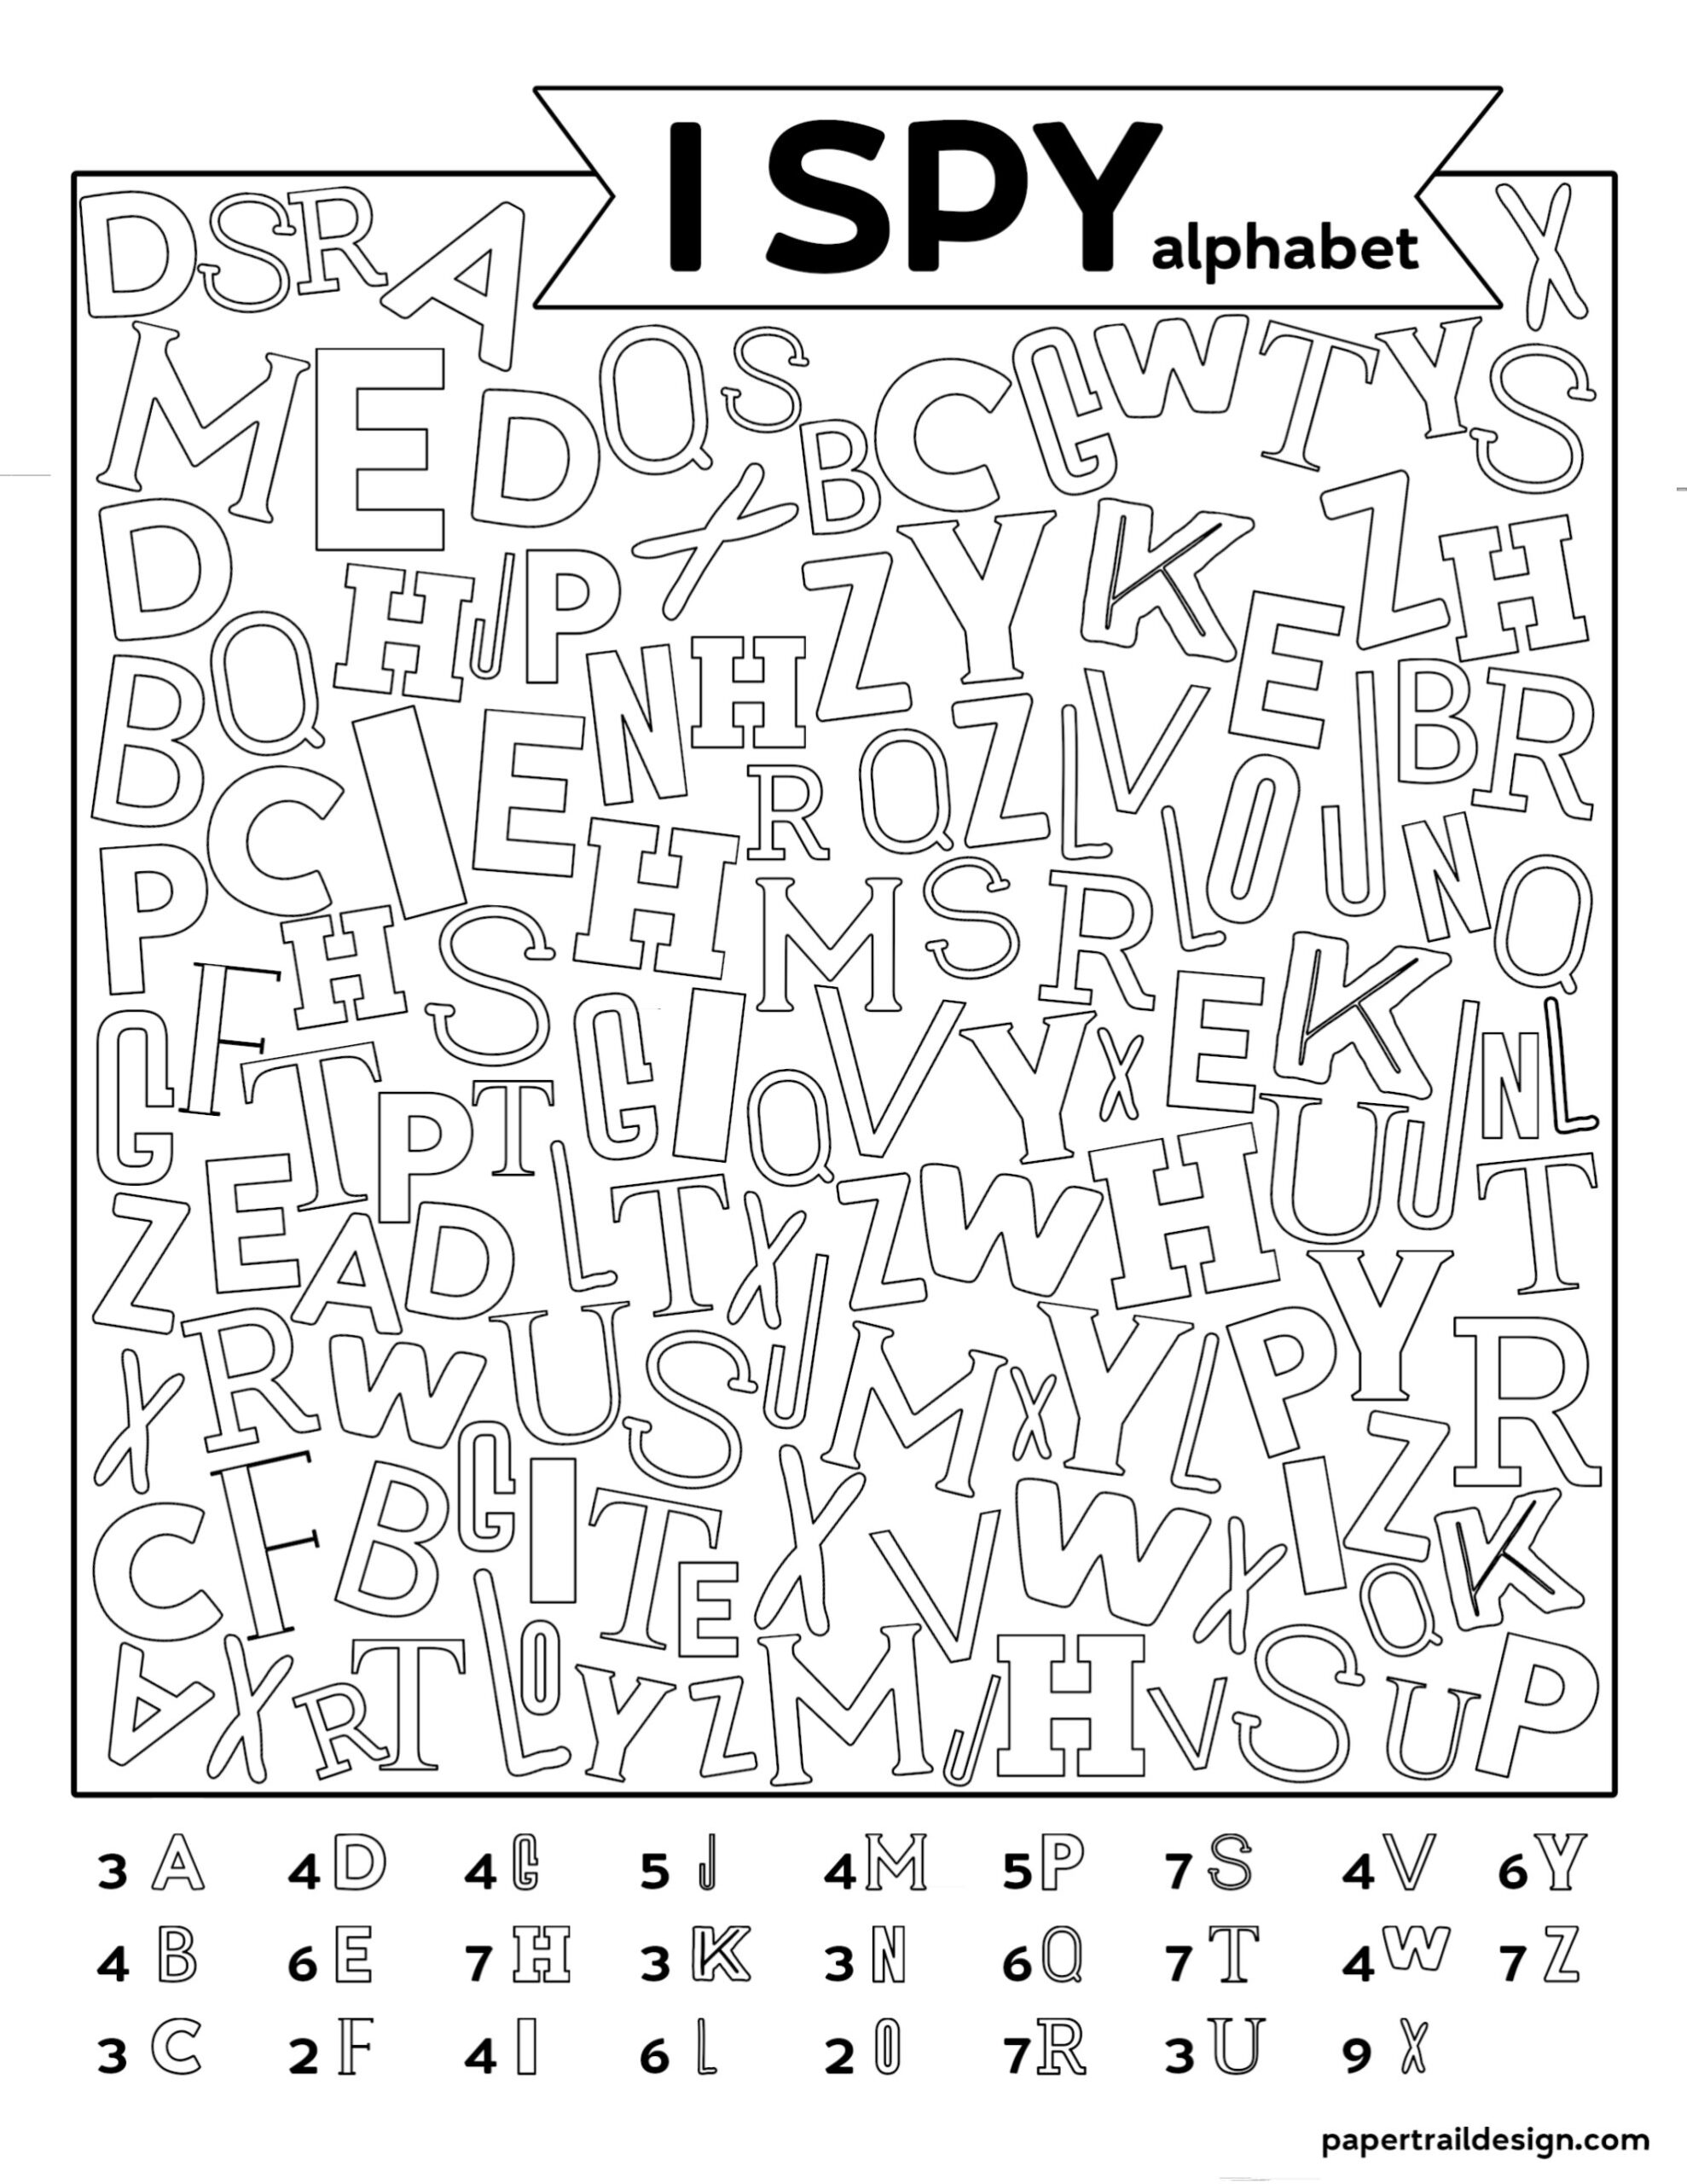 Free Printable Alphabet I Spy Game - Paper Trail Design - Free Printable Alphabet Games And Activities